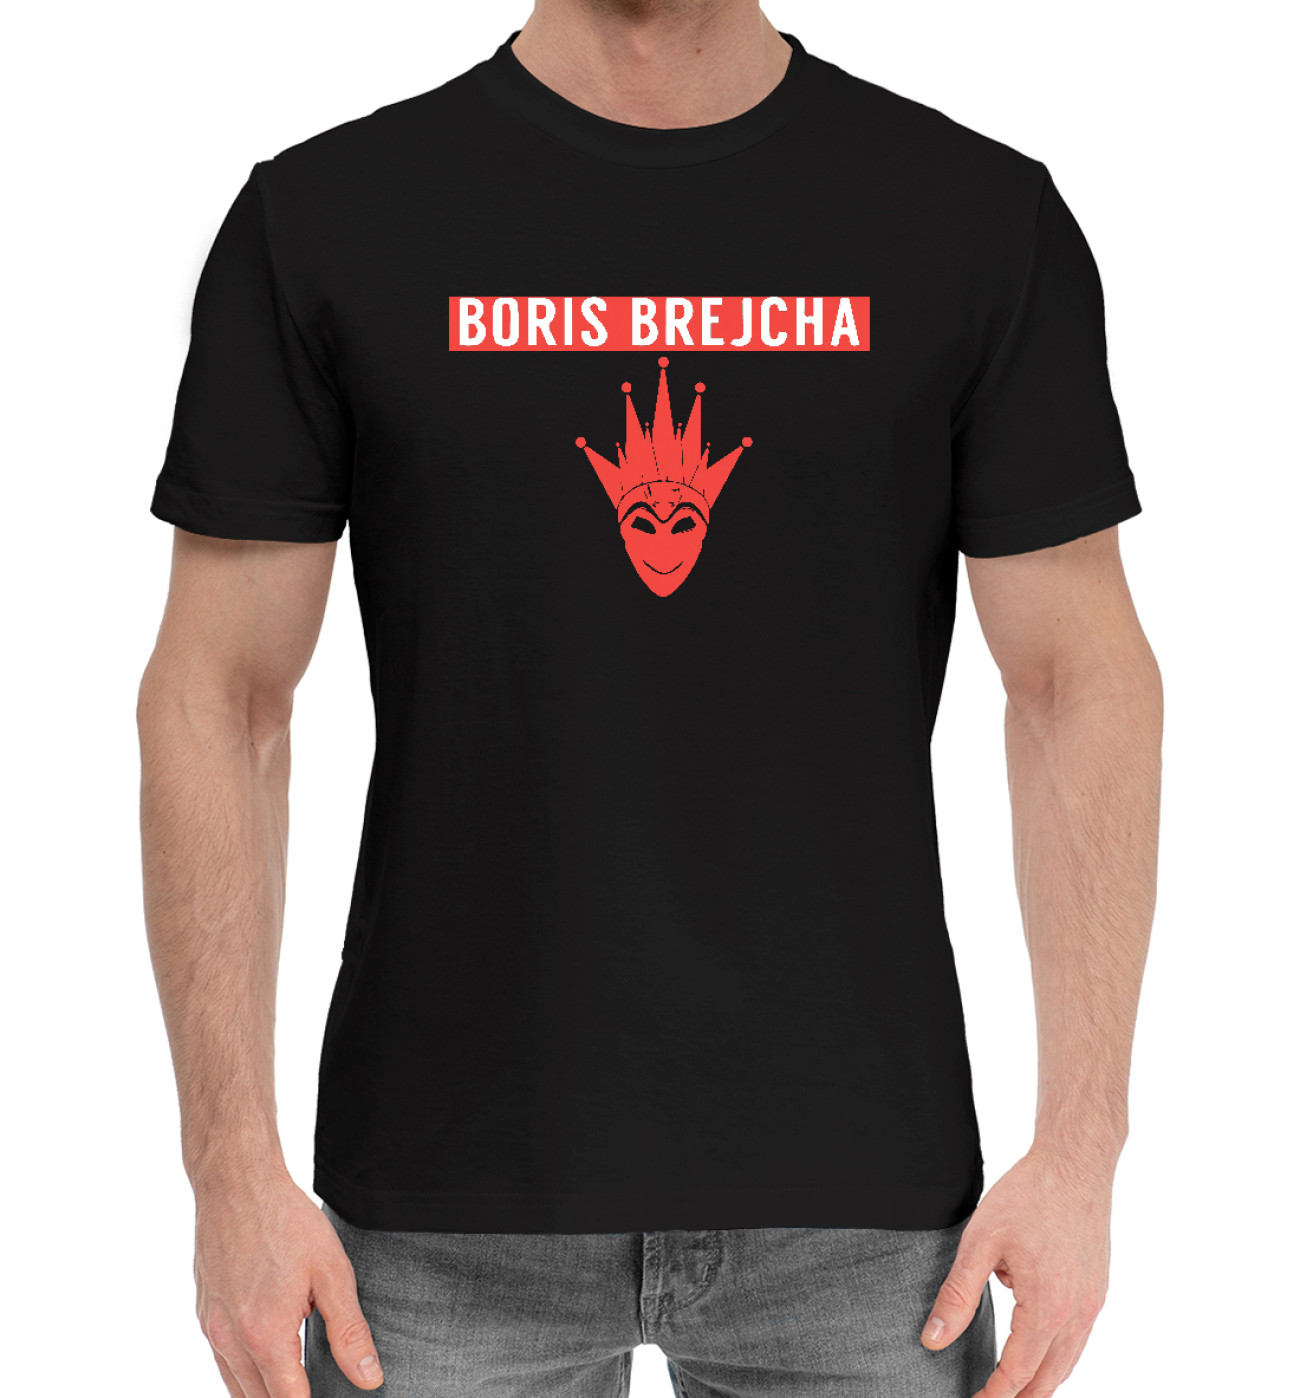 Мужская Хлопковая футболка Boris Brejcha, артикул: BBA-876846-hfu-2